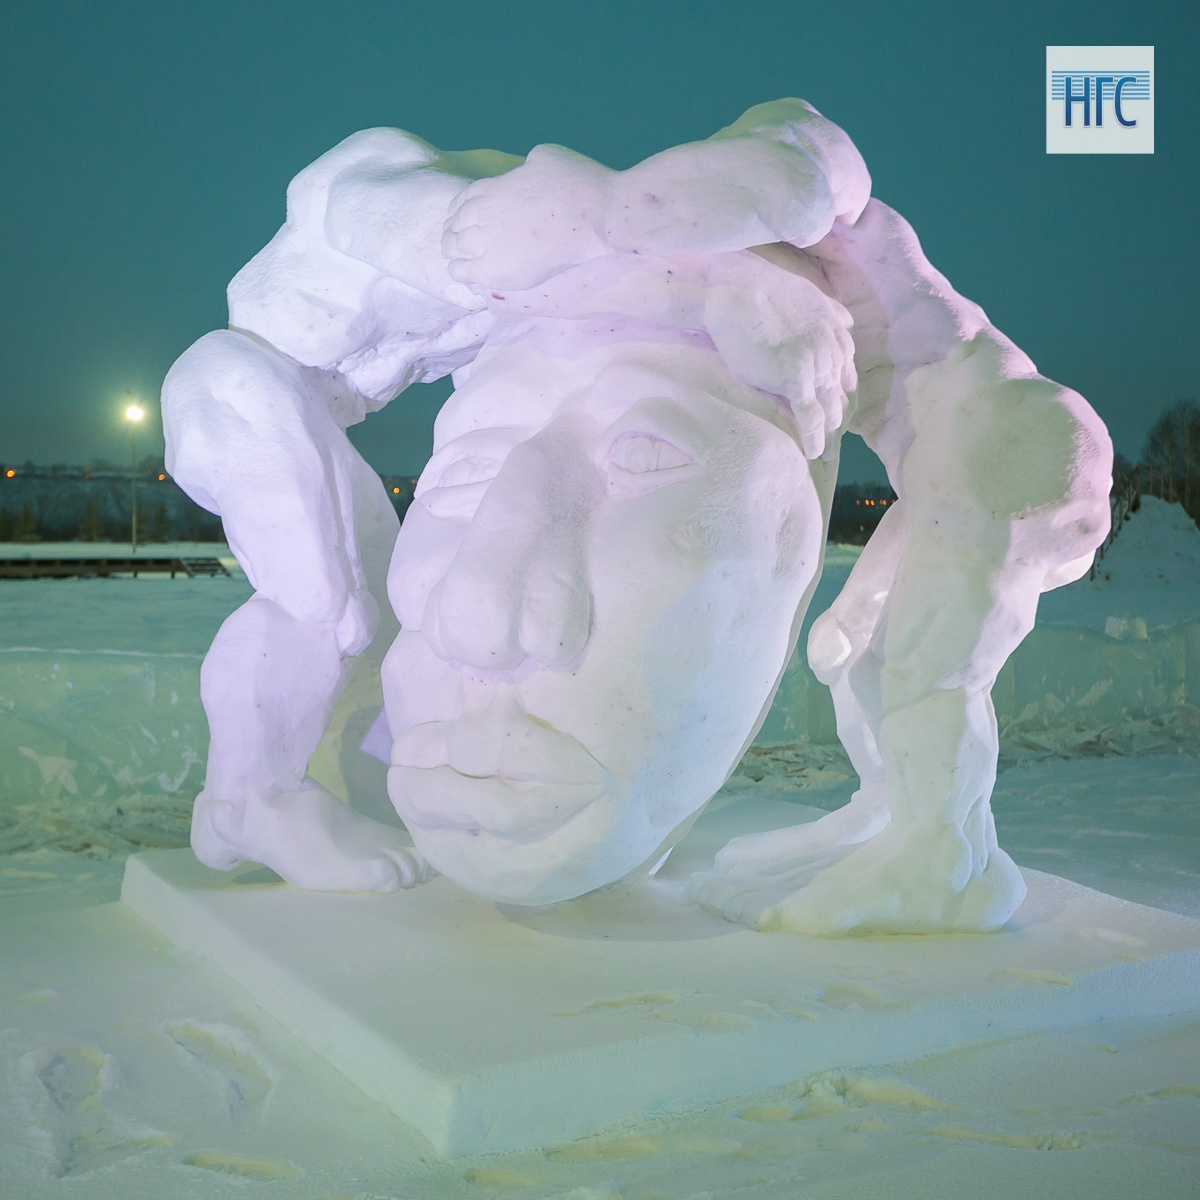 Скульптура «Сотрудничество», команда Snow Art, Гливице (Польша)